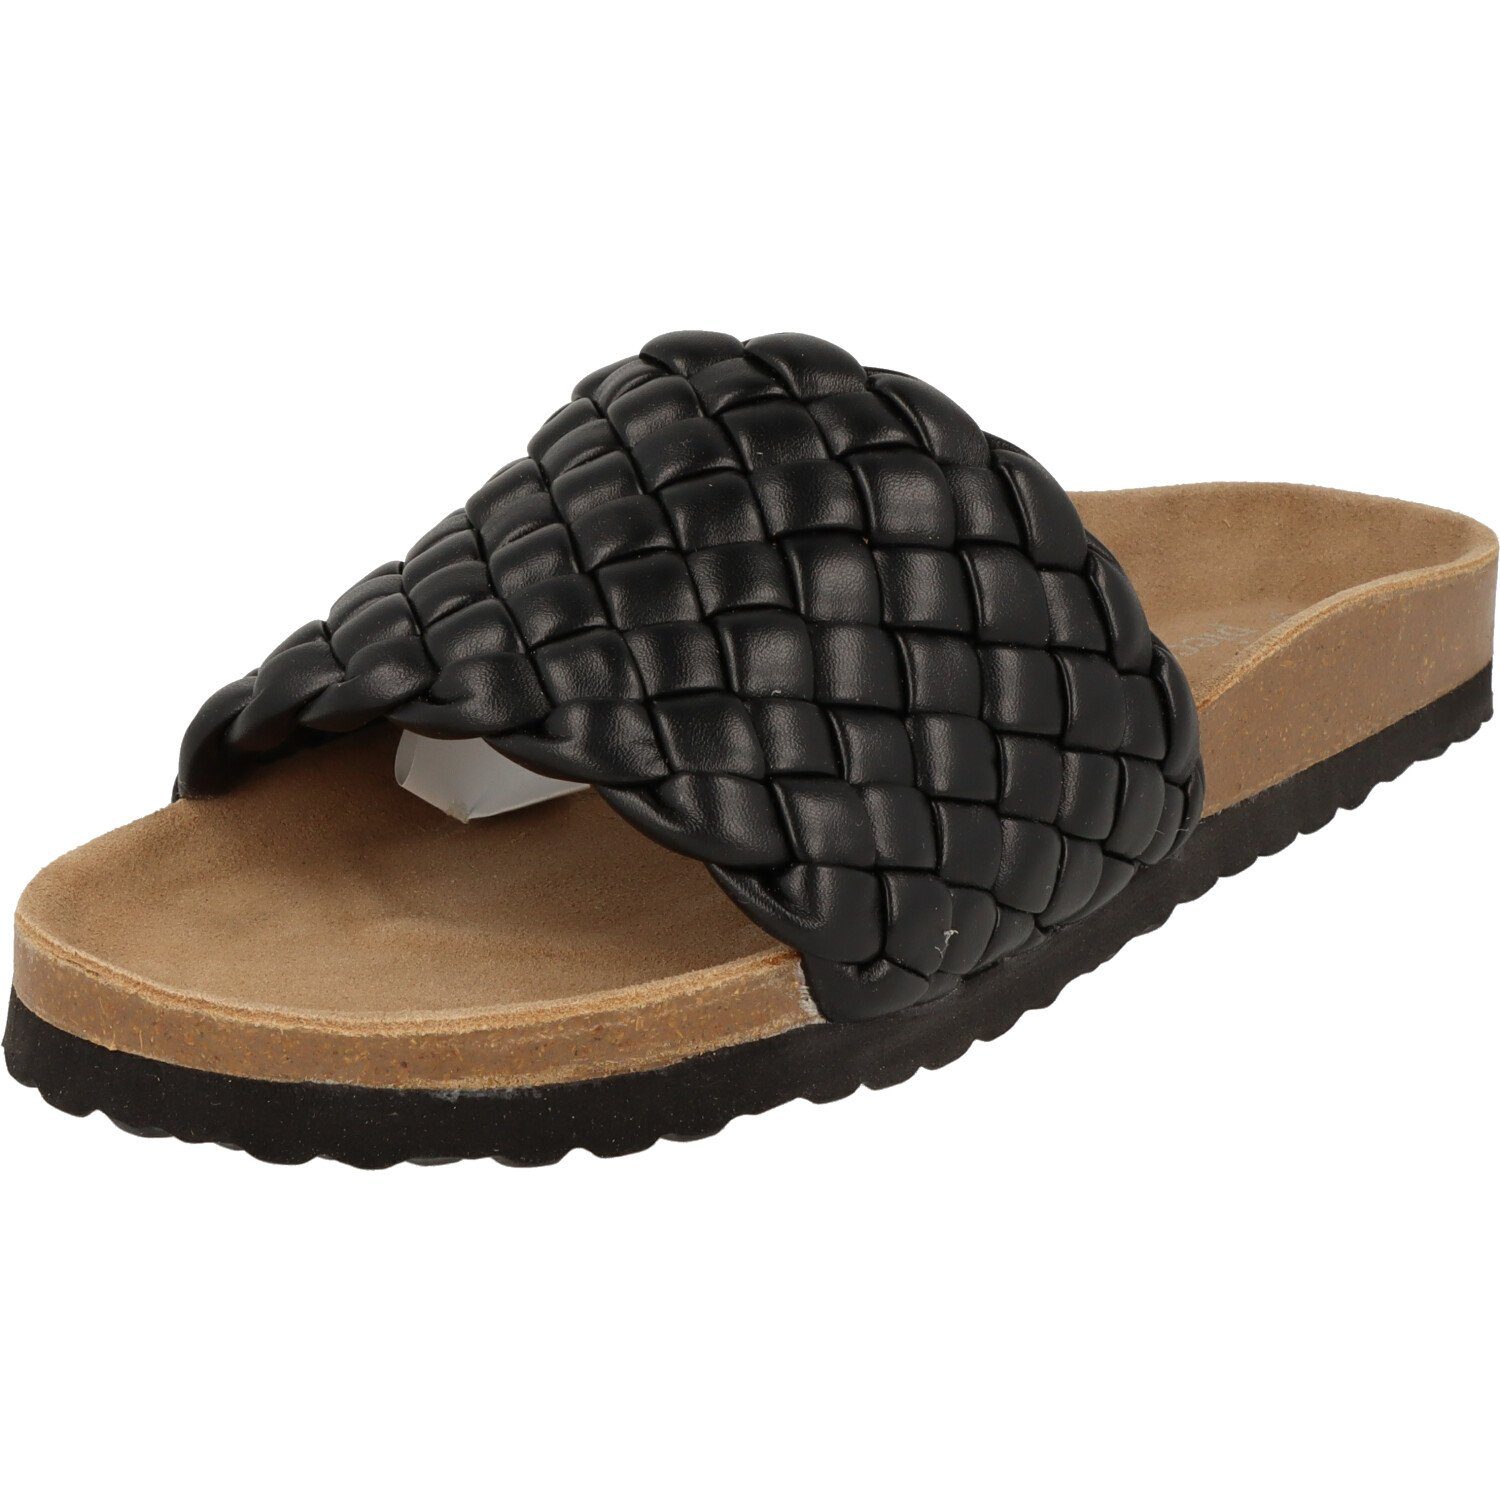 Heutige Neuankömmlinge piece of mind. 274-043 Damen Komfort Schuhe Fußbett Black elegante Pantolette Slipper